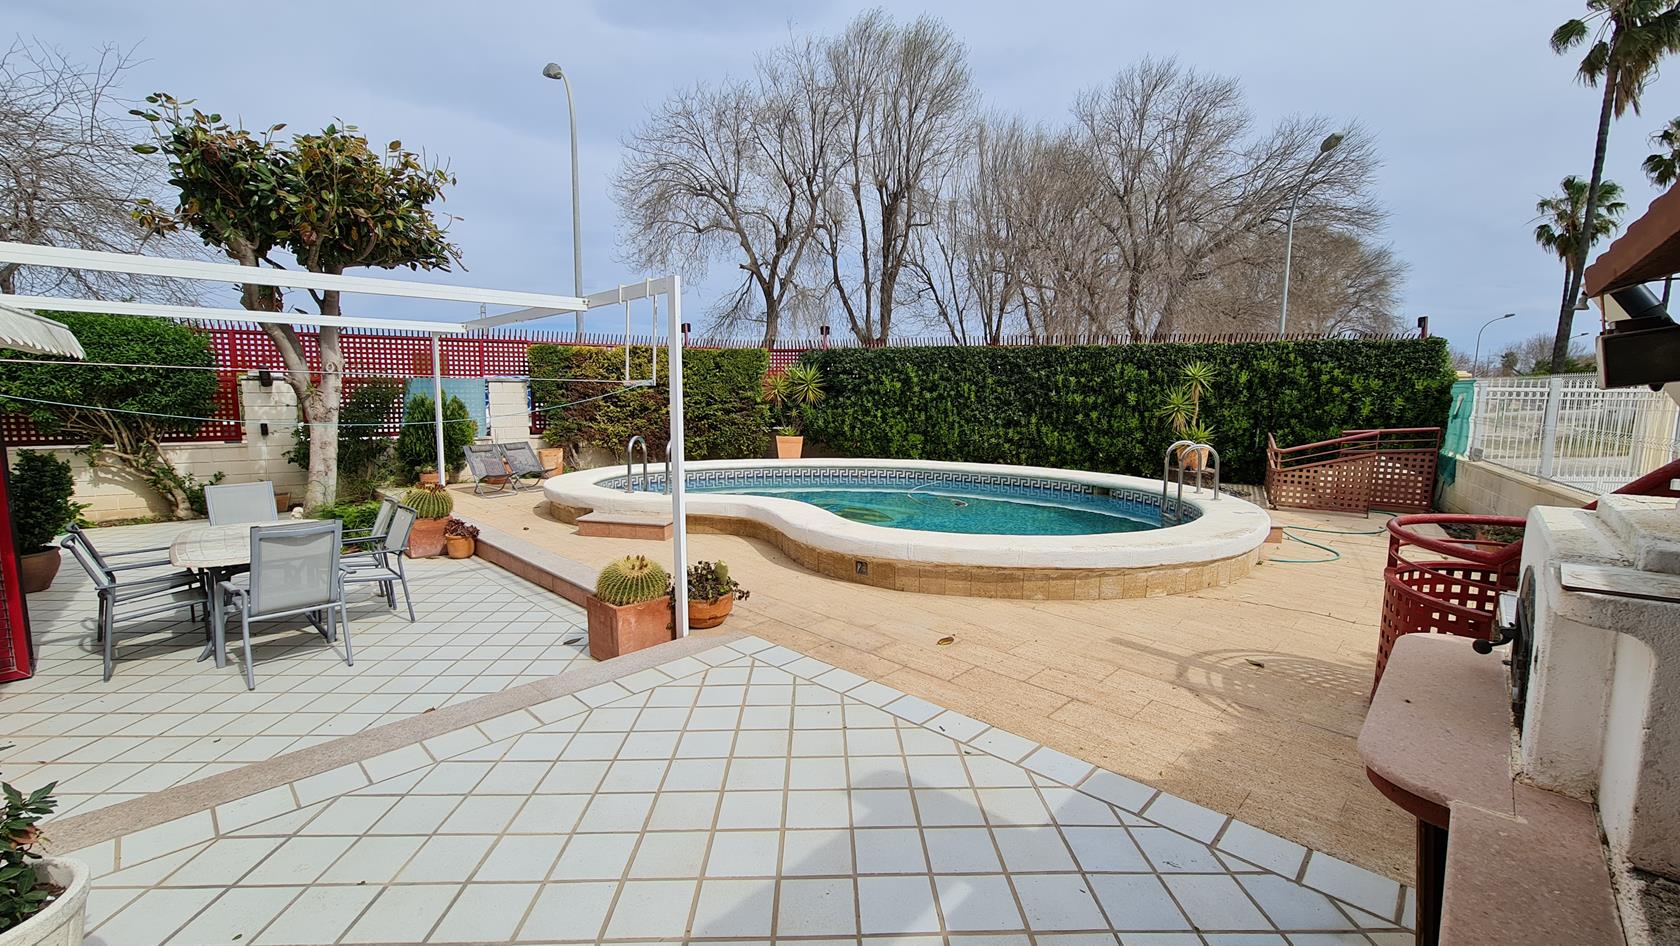 Fantastic detached villa with pool, garden, garage.